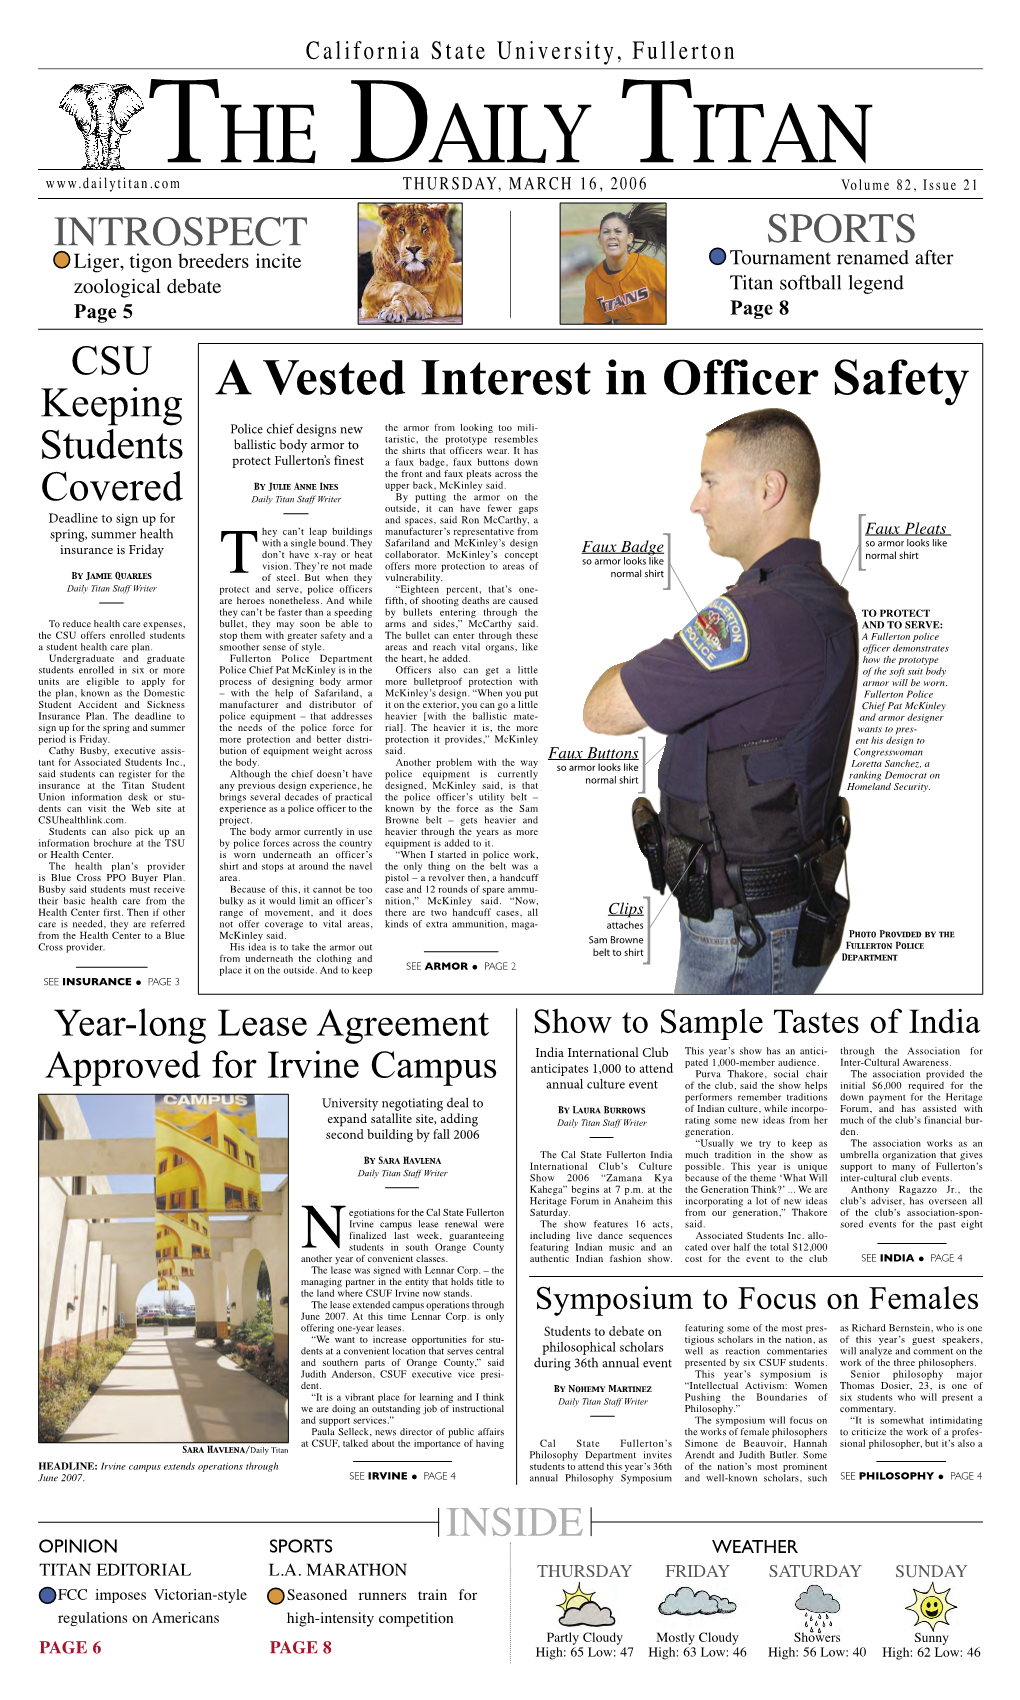 A Vested Interest in Officer Safety